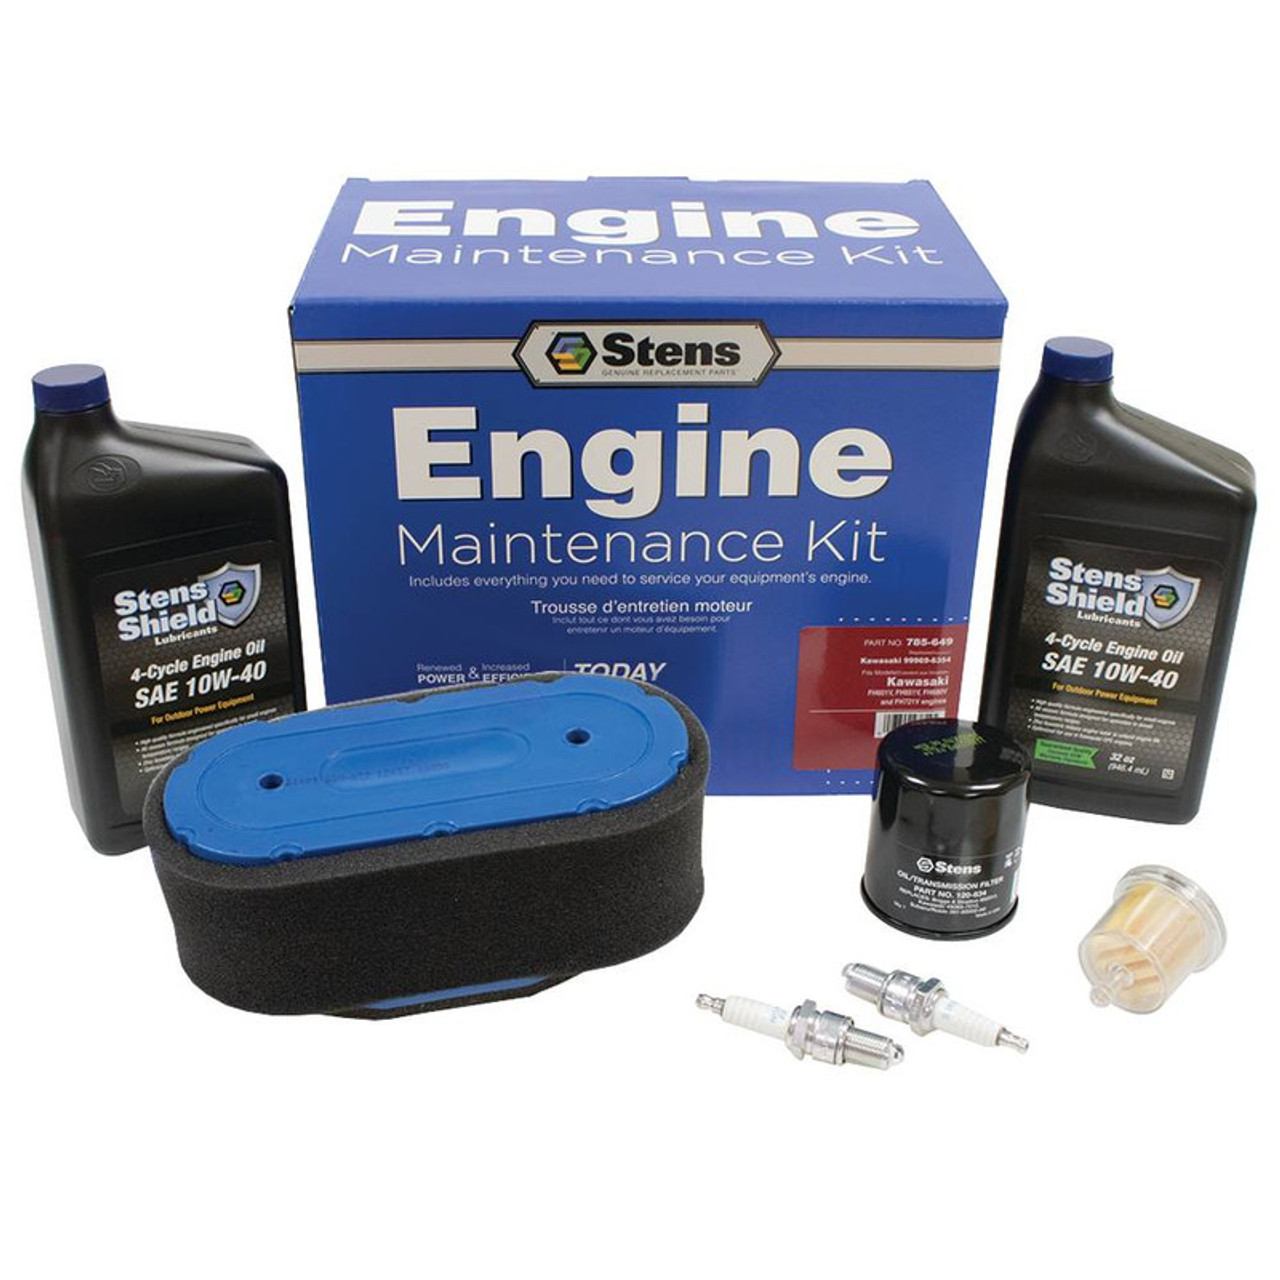 Engine Tune Up Kit for Kawasaki FH601V, FH651V, FH680V, FH721V, Air Filter, Spark Plugs, Oil Filter, Oil, Fuel Filter 999696211A, 999696354, 999696378, 999696407, 99969-6211A, 99969-6354, 99969-6378, 99969-6407 Maintenance